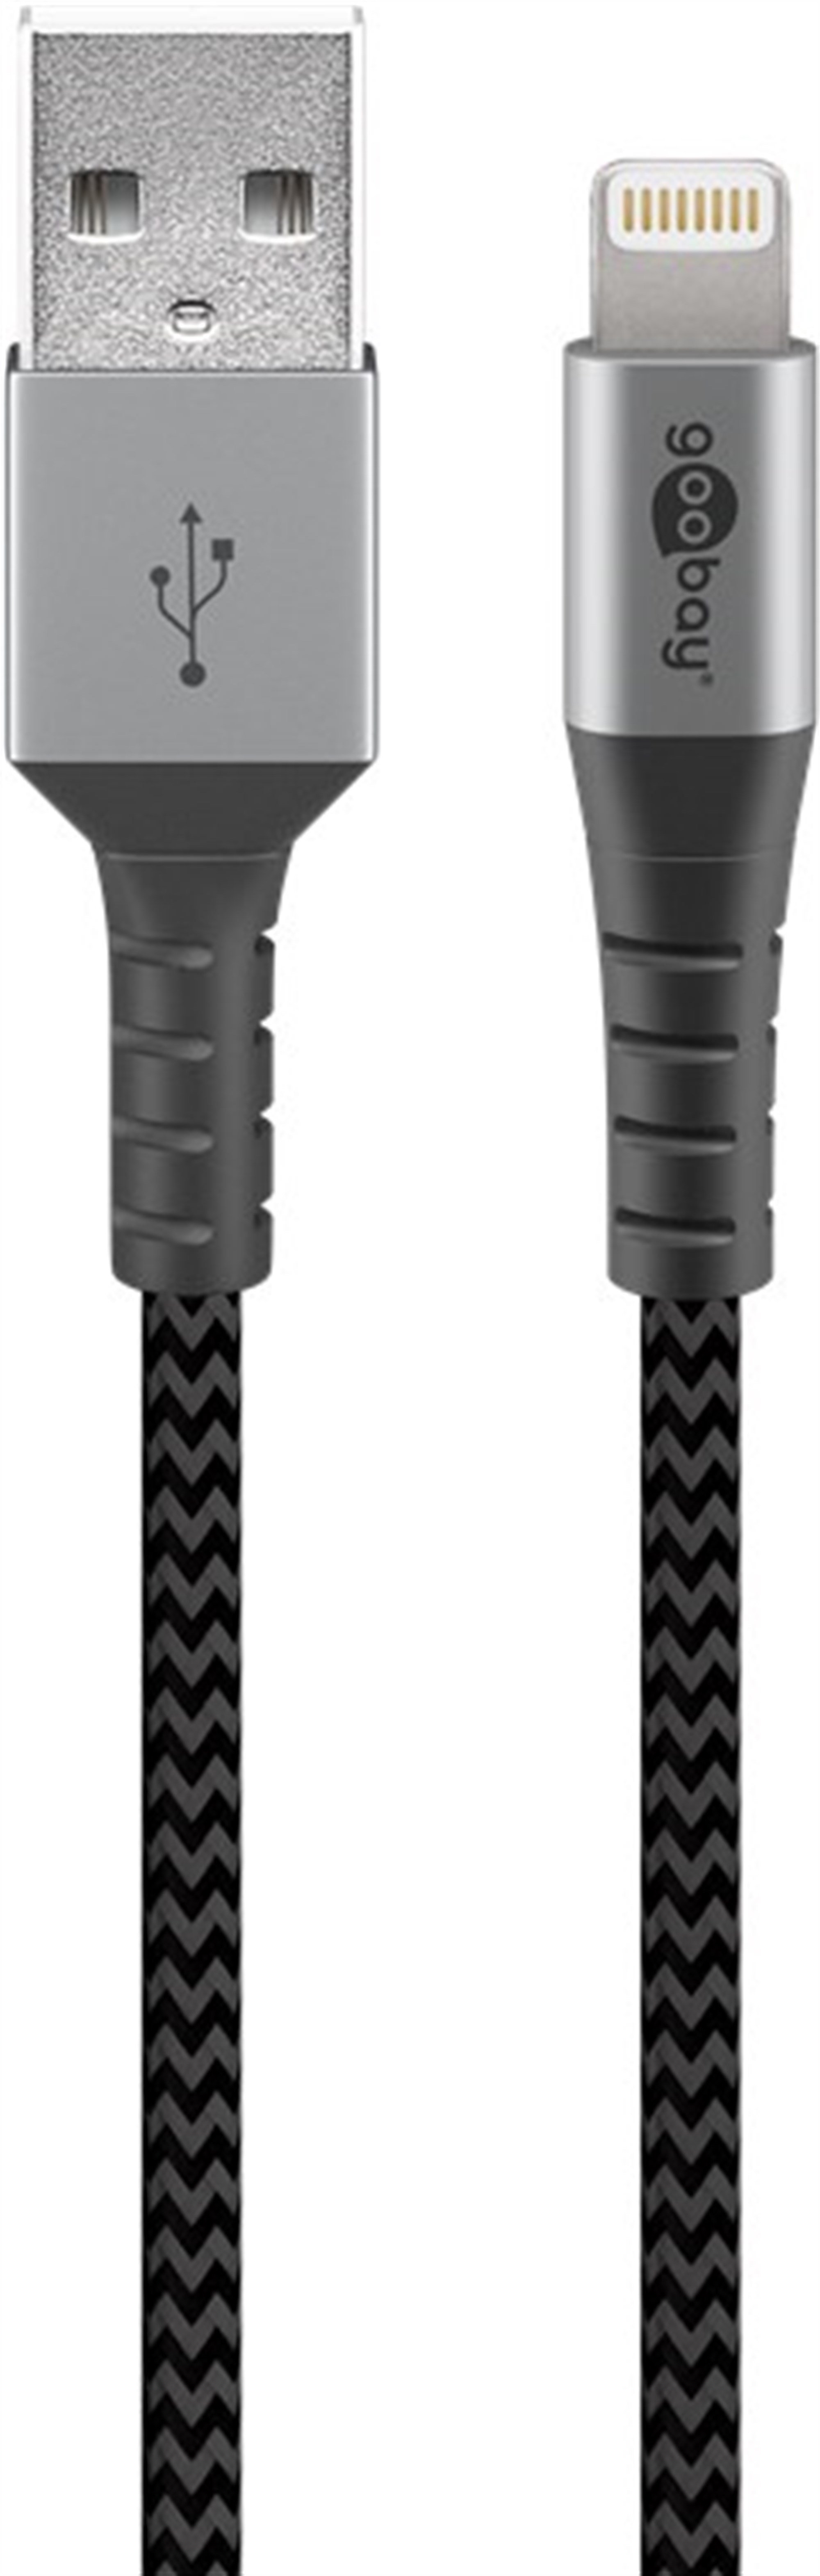 Metal fişli Lightning - USB-A tekstil kablosu, Apple iPhone, iPad, iPod,  AirPod için ekstra sağlam bağlantı